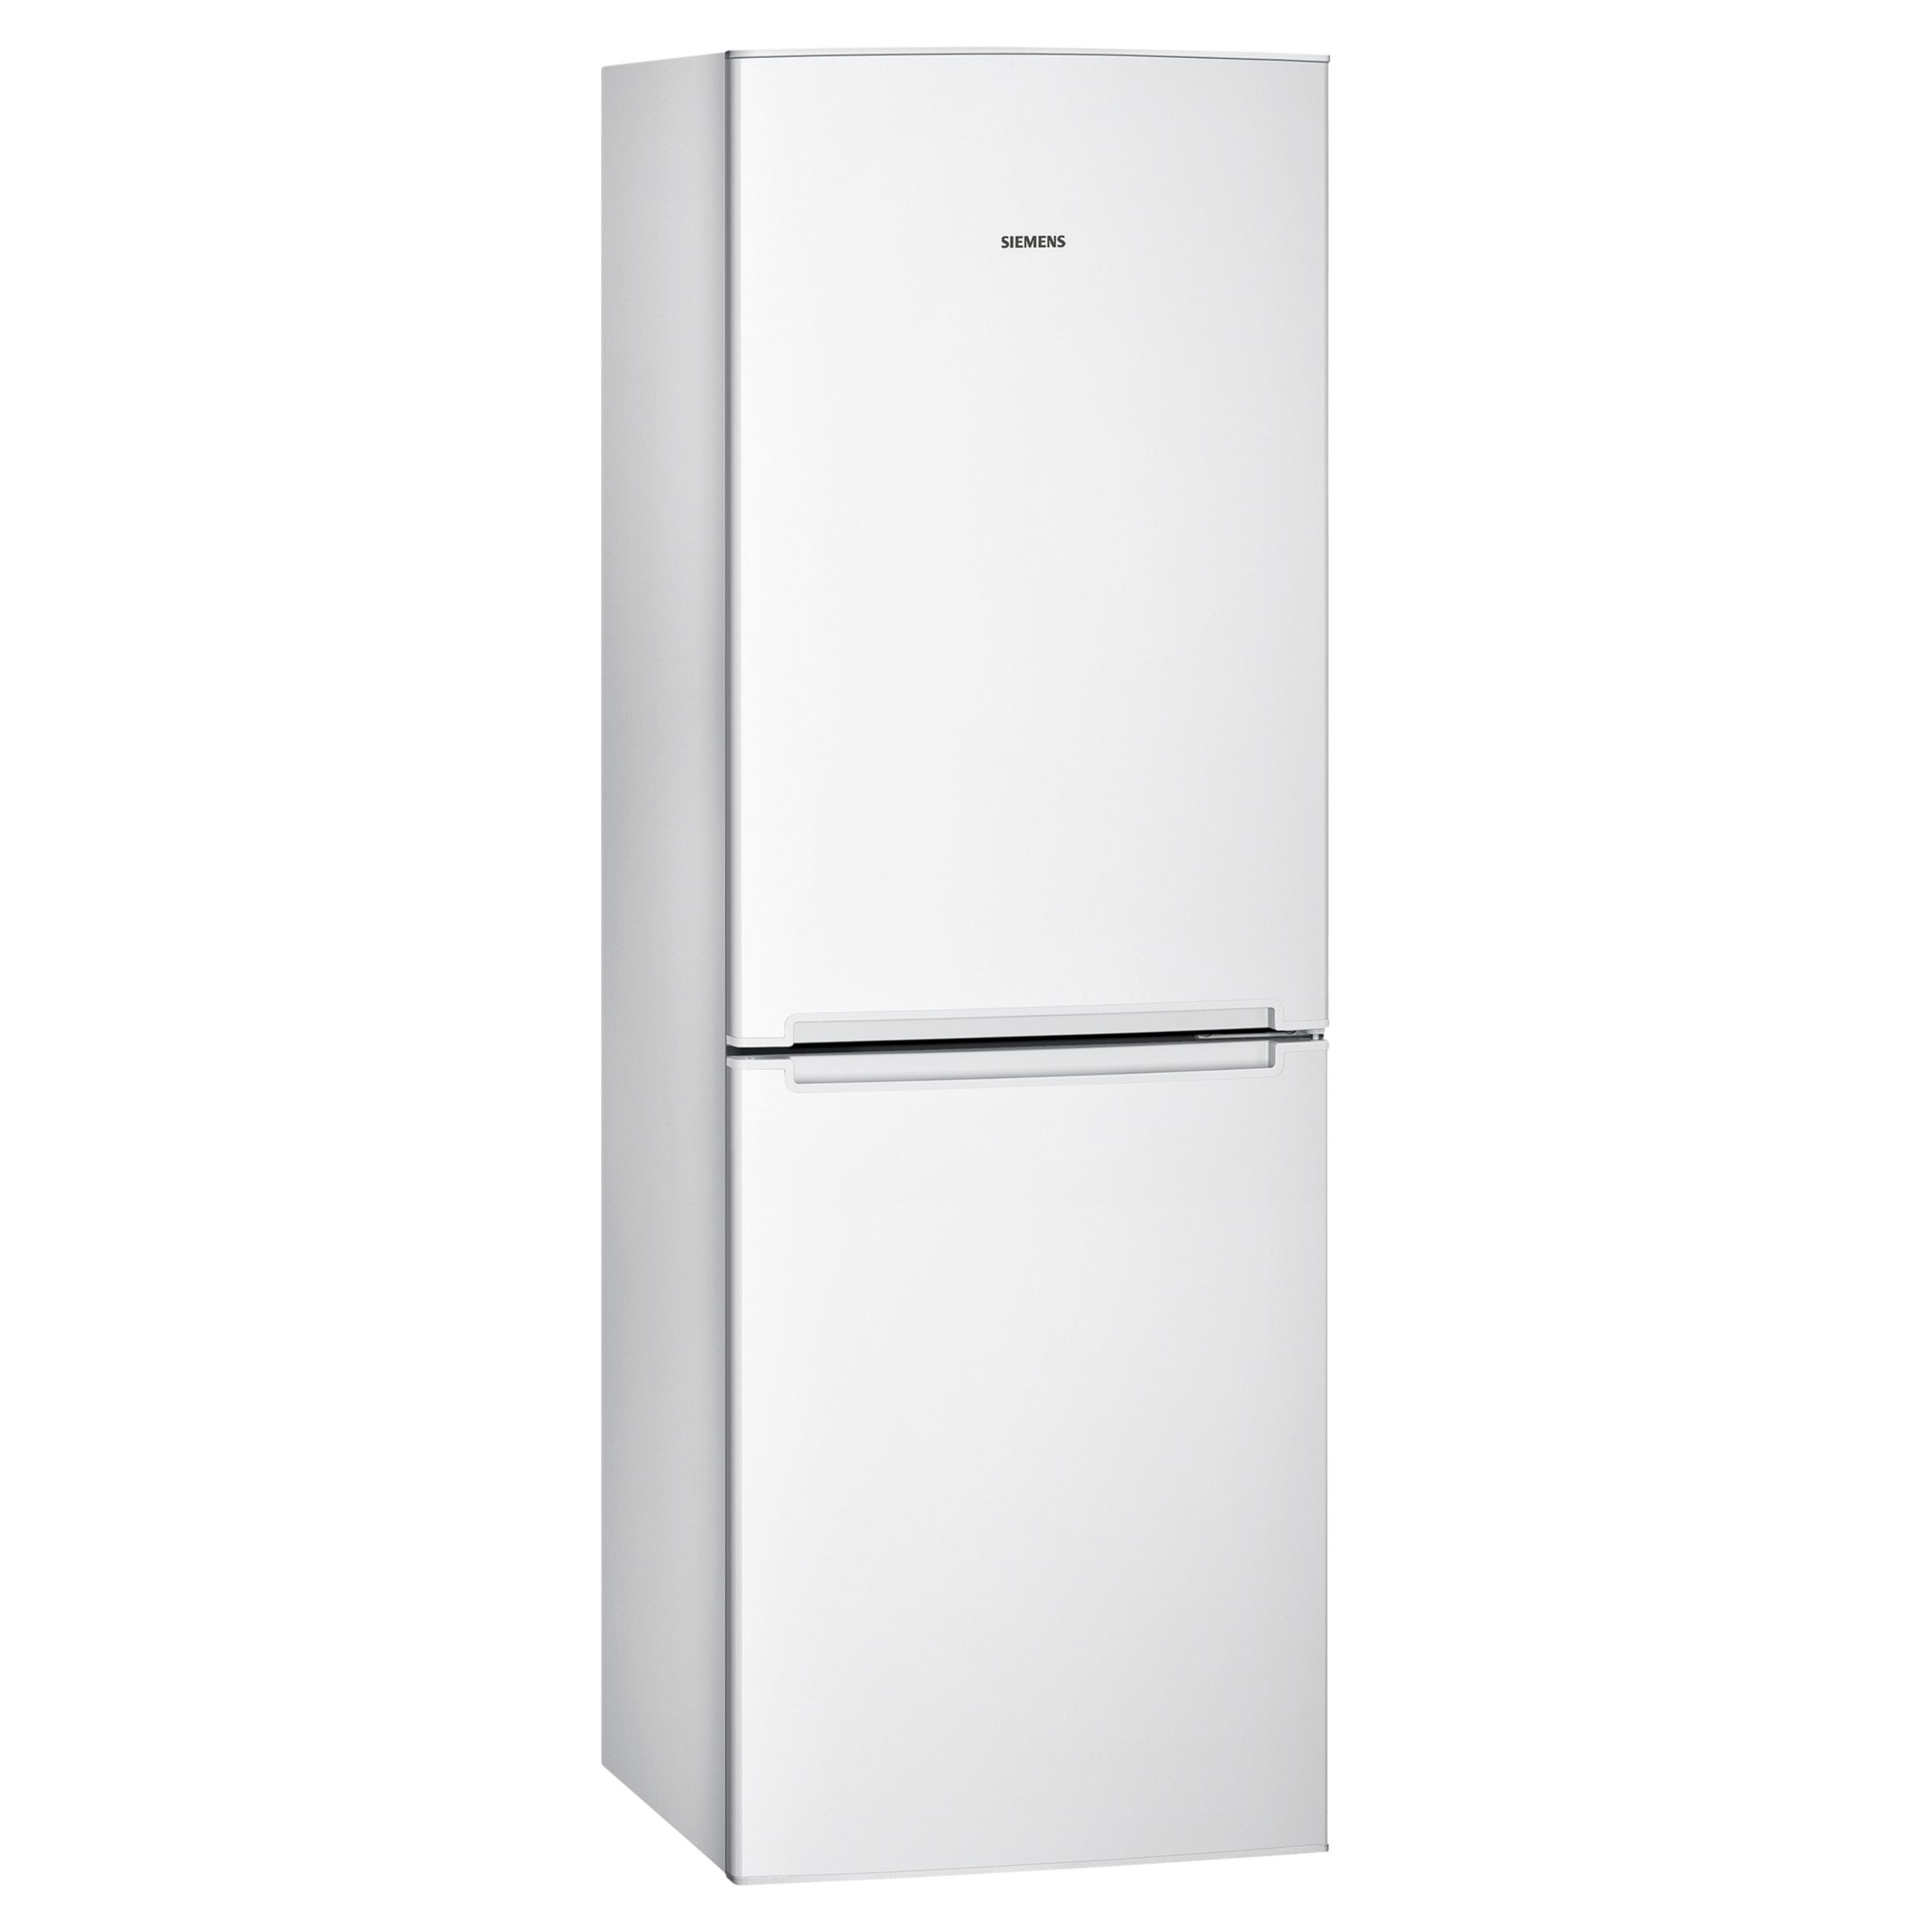 Siemens KG30NVW25G Freestanding Fridge Freezer, A+ Energy Rating, 60cm Wide, White